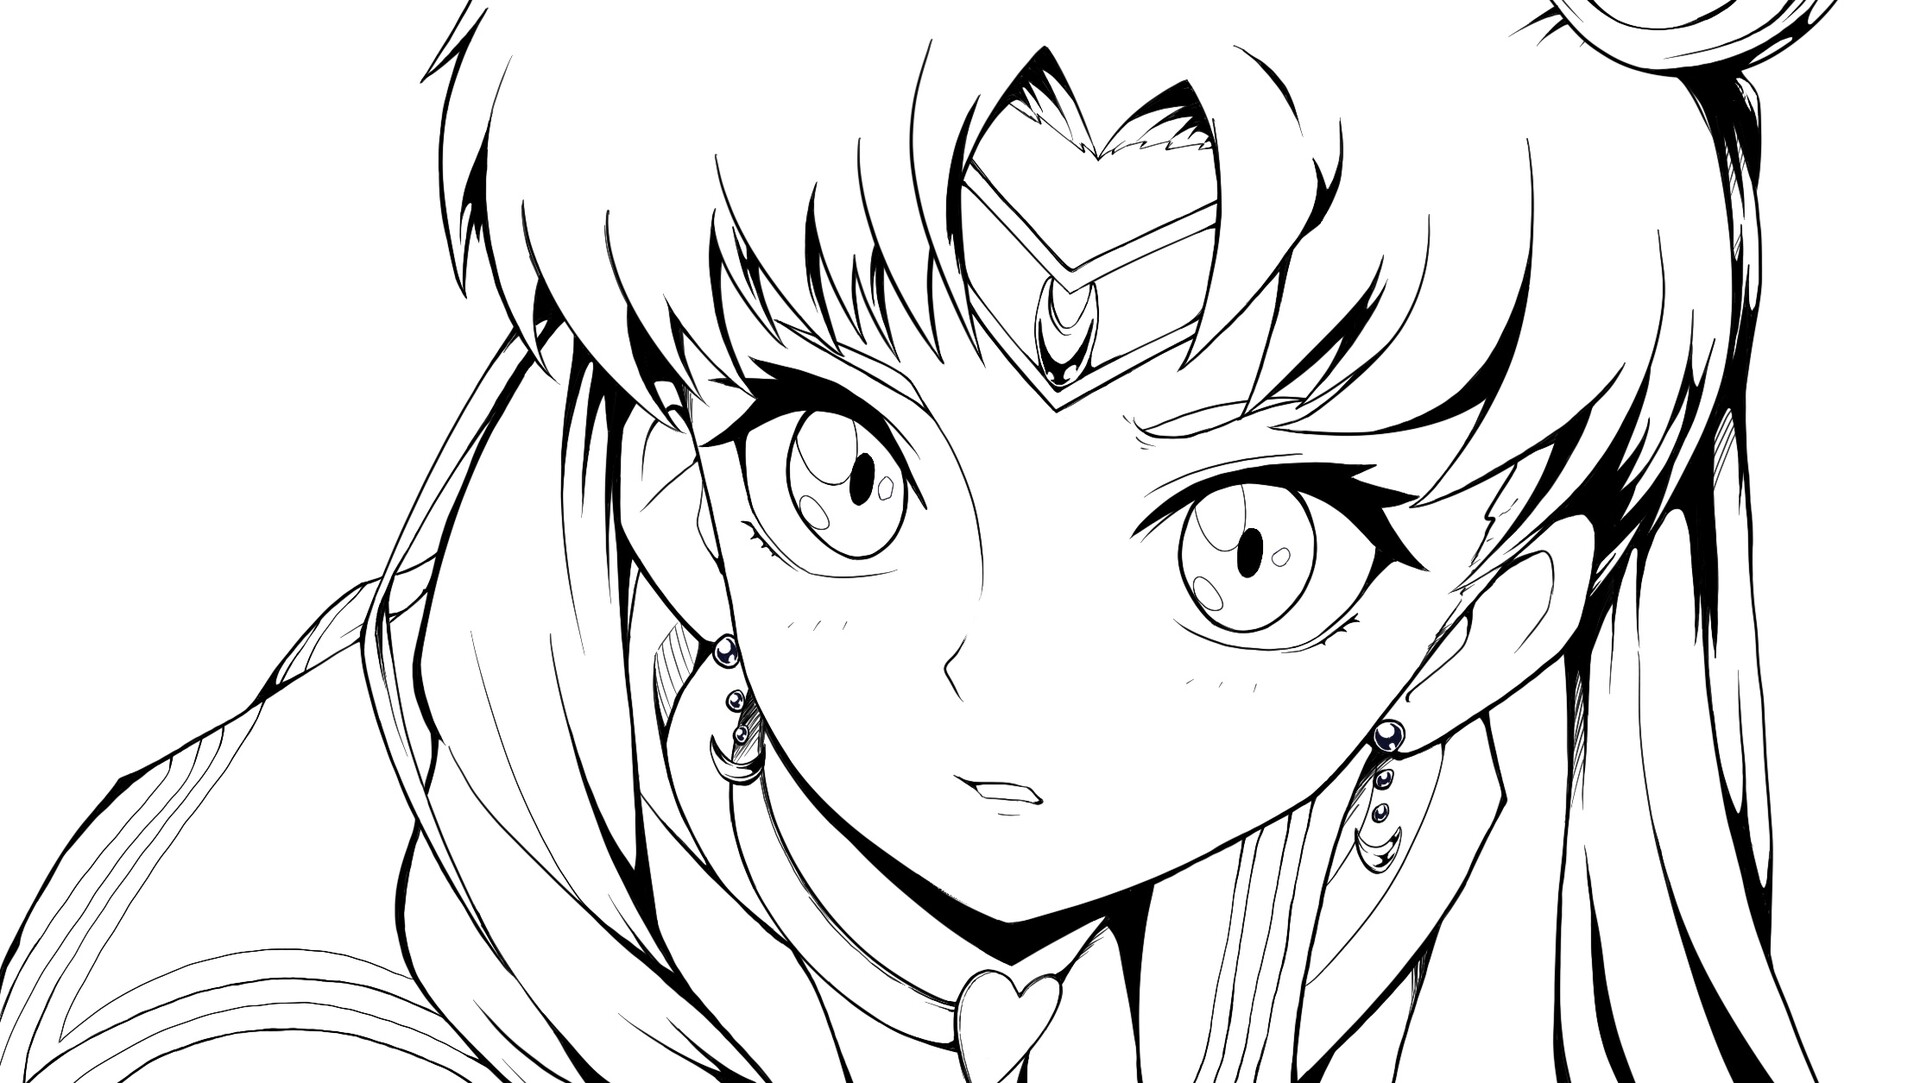 New Artwork 90s Anime | Sailor Moon x Suburban Senshi Forums